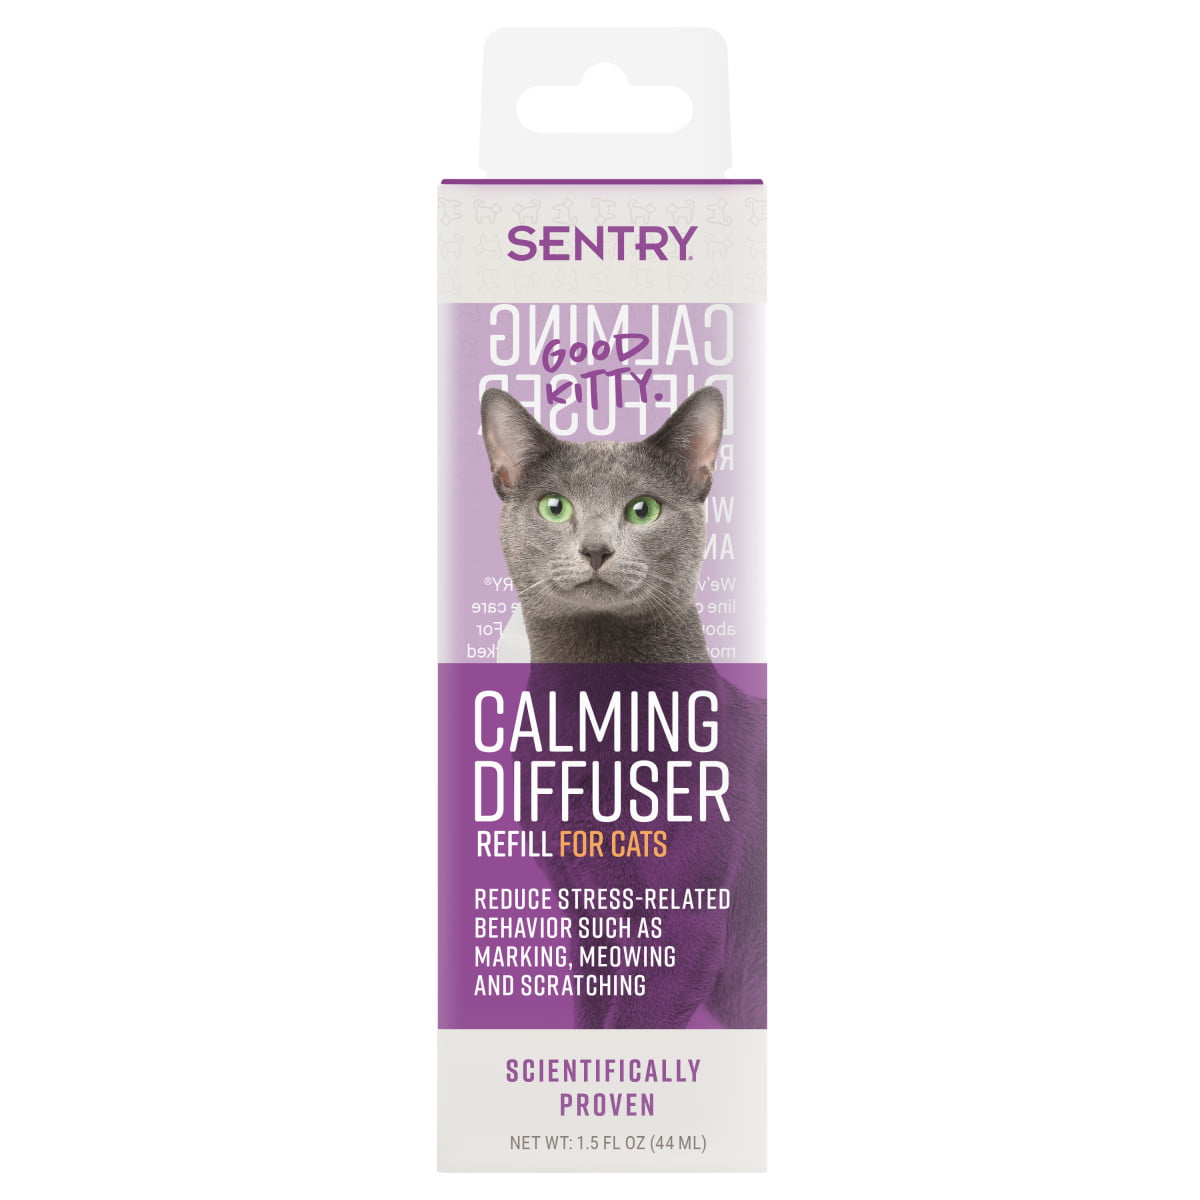 SENTRY Calming Diffuser Refill for Cats, 1.5 oz.